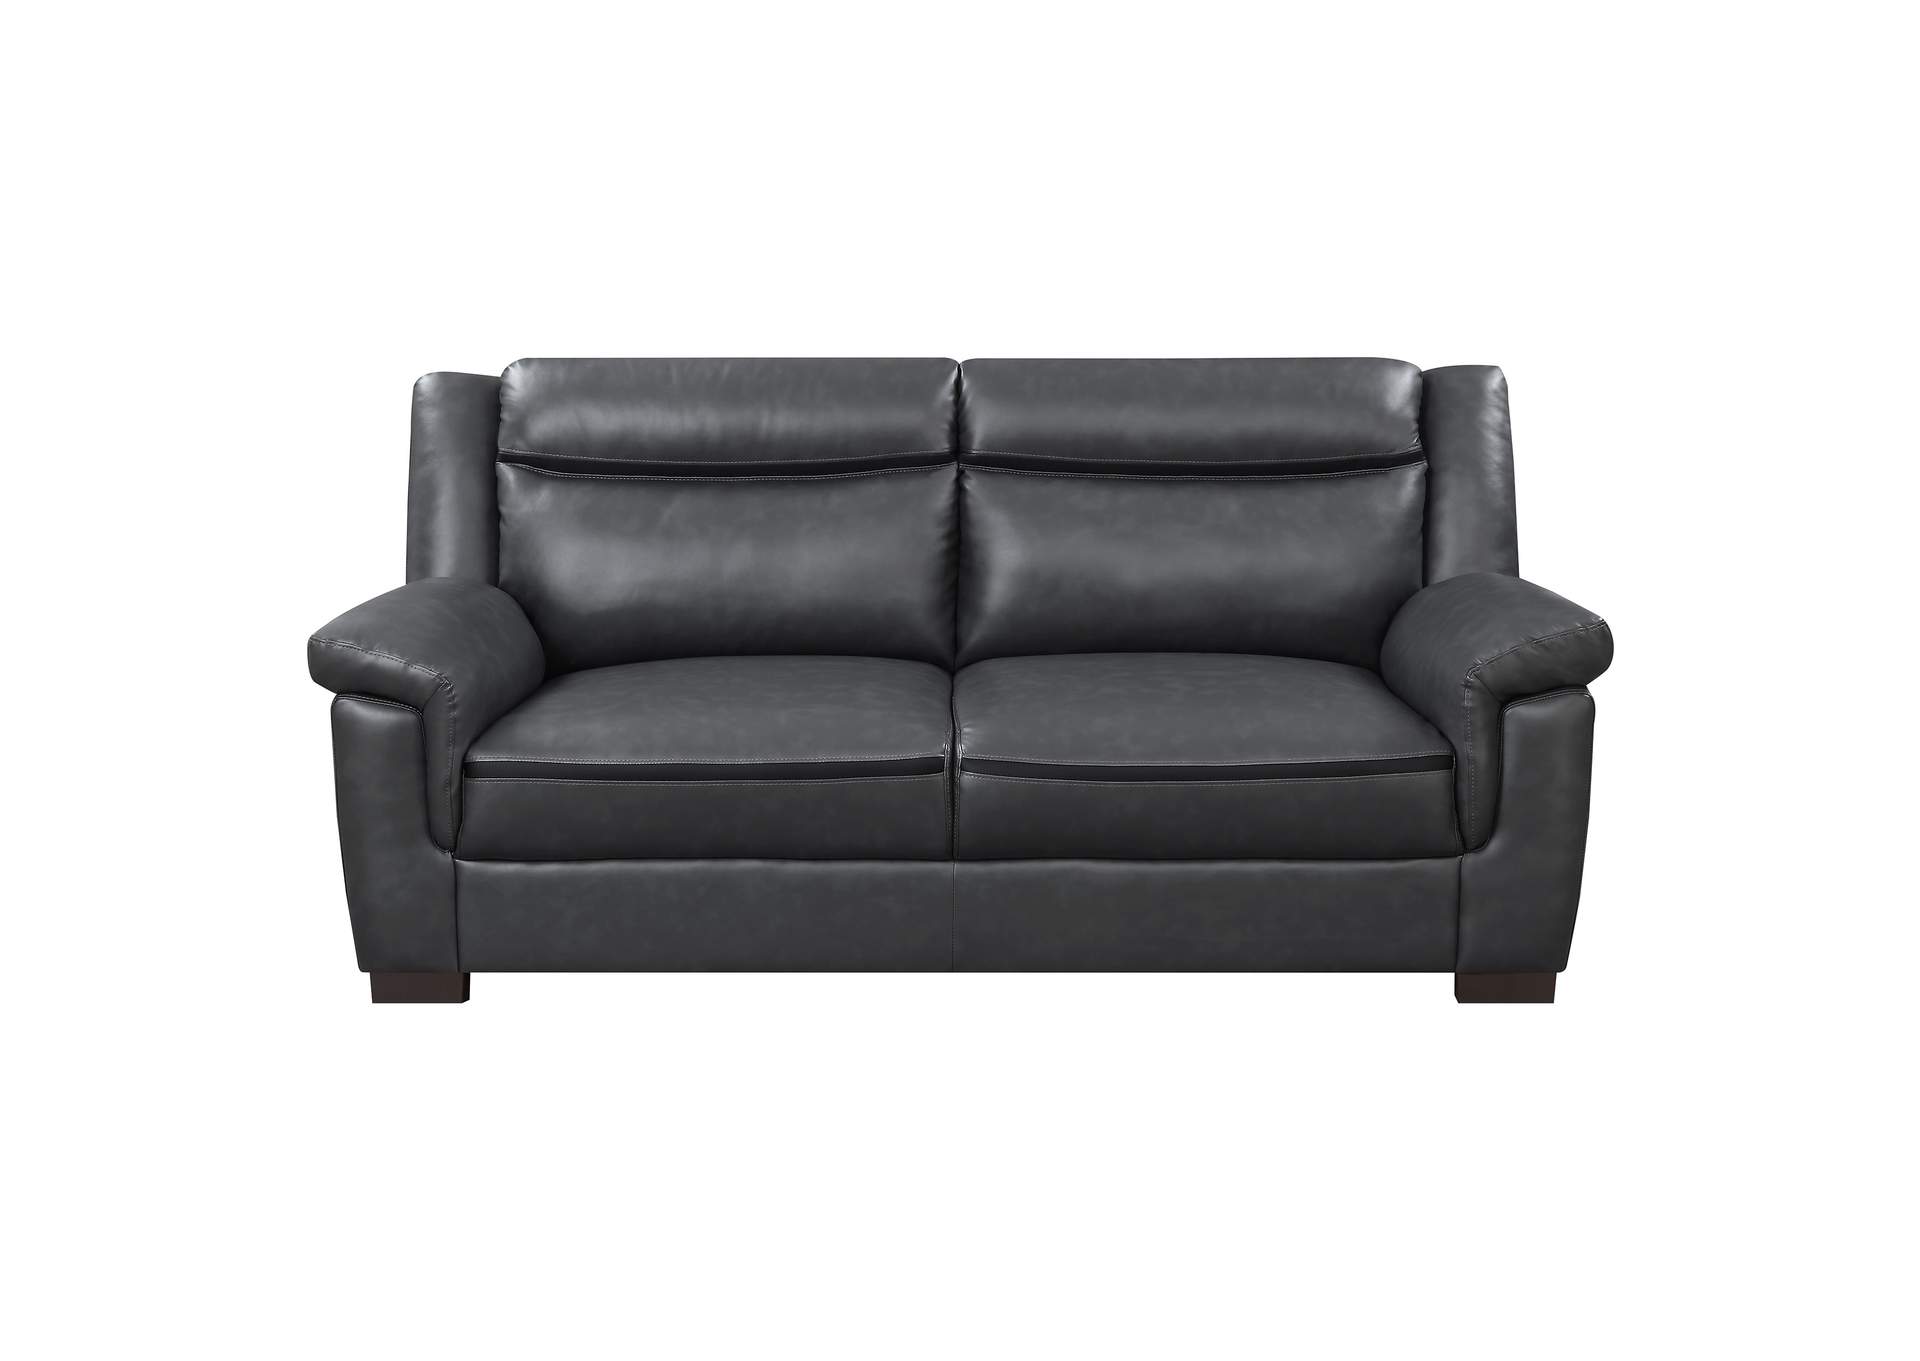 Arabella Pillow Top Upholstered Sofa Grey,Coaster Furniture